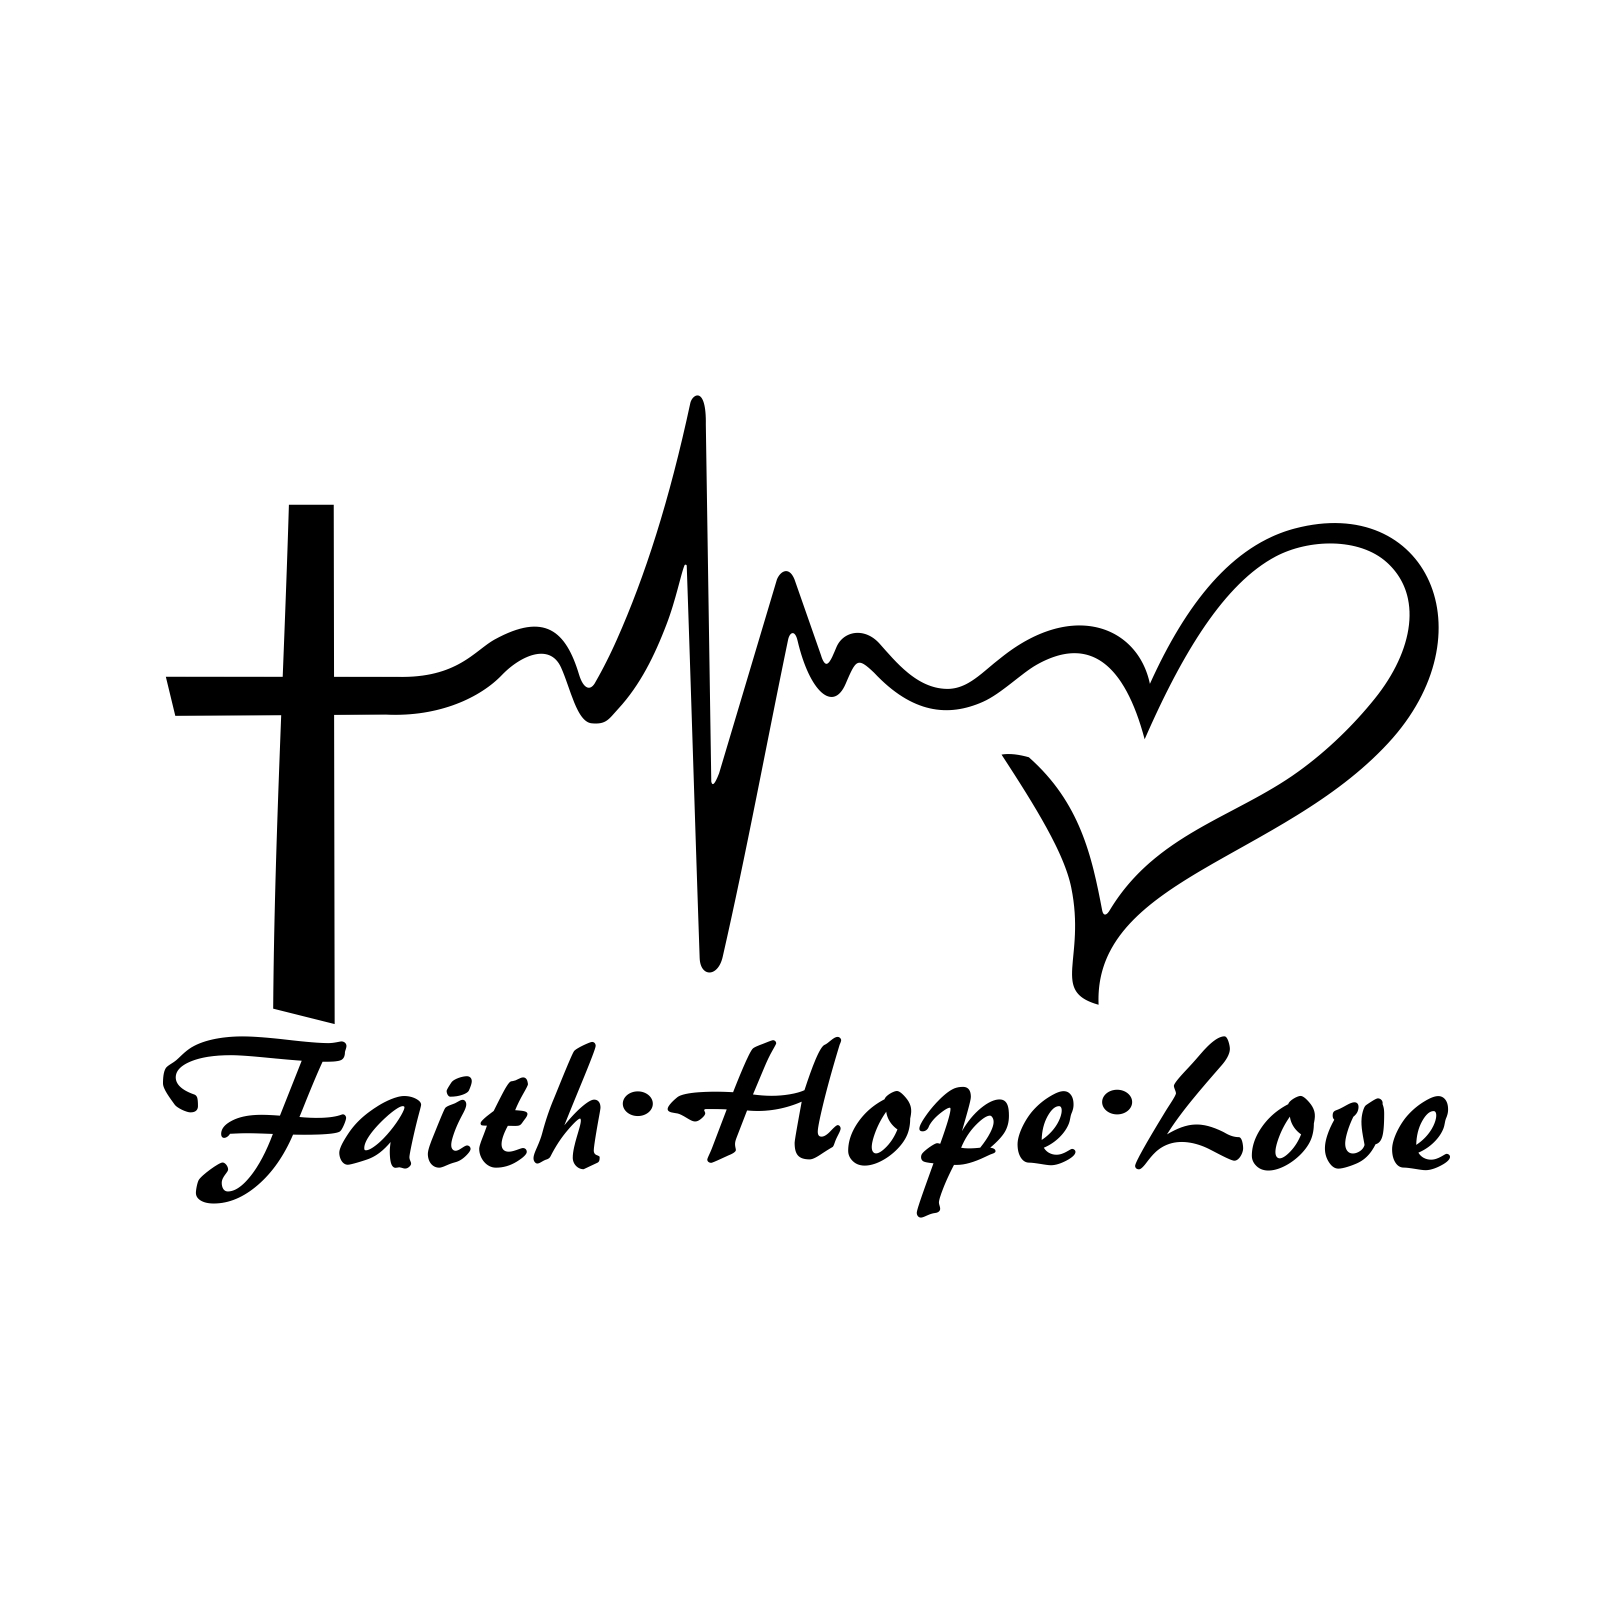 Faith Hope Love Heart graphics design SVG DXF by vectordesign on